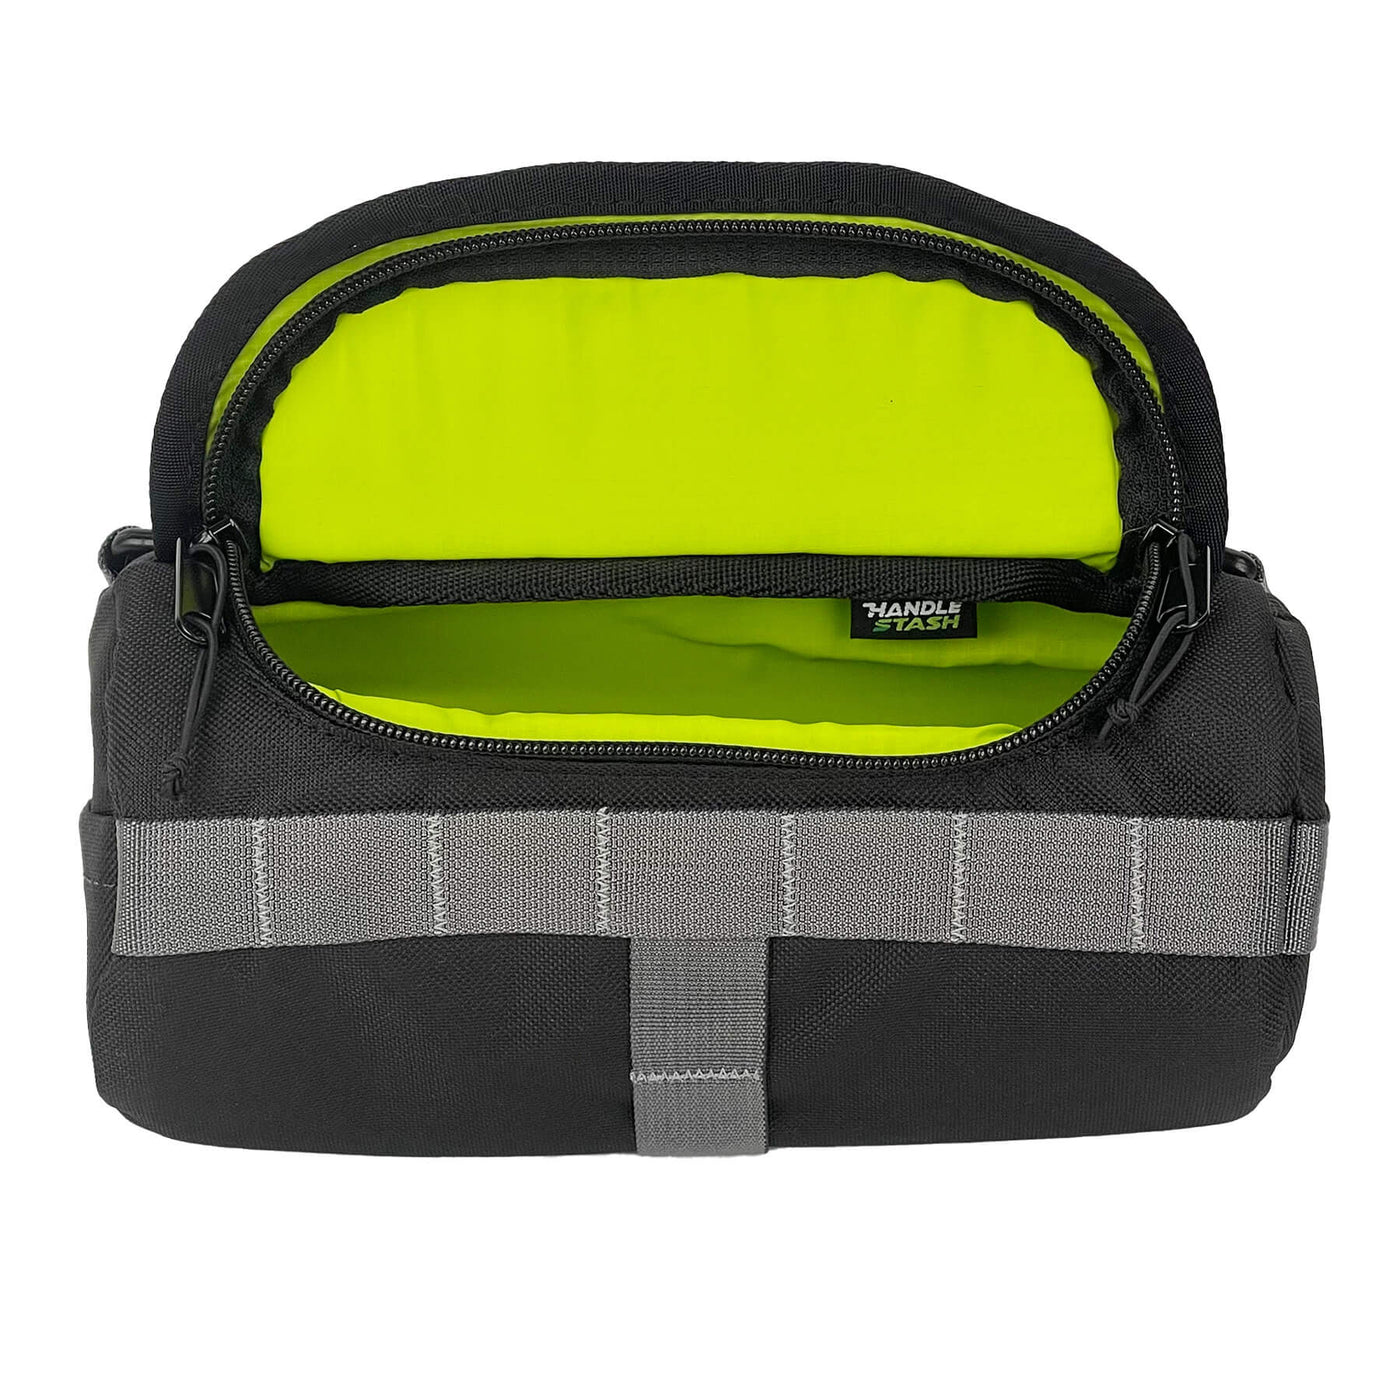 Black HandleStash handlebar bag unzipped with green liner. 